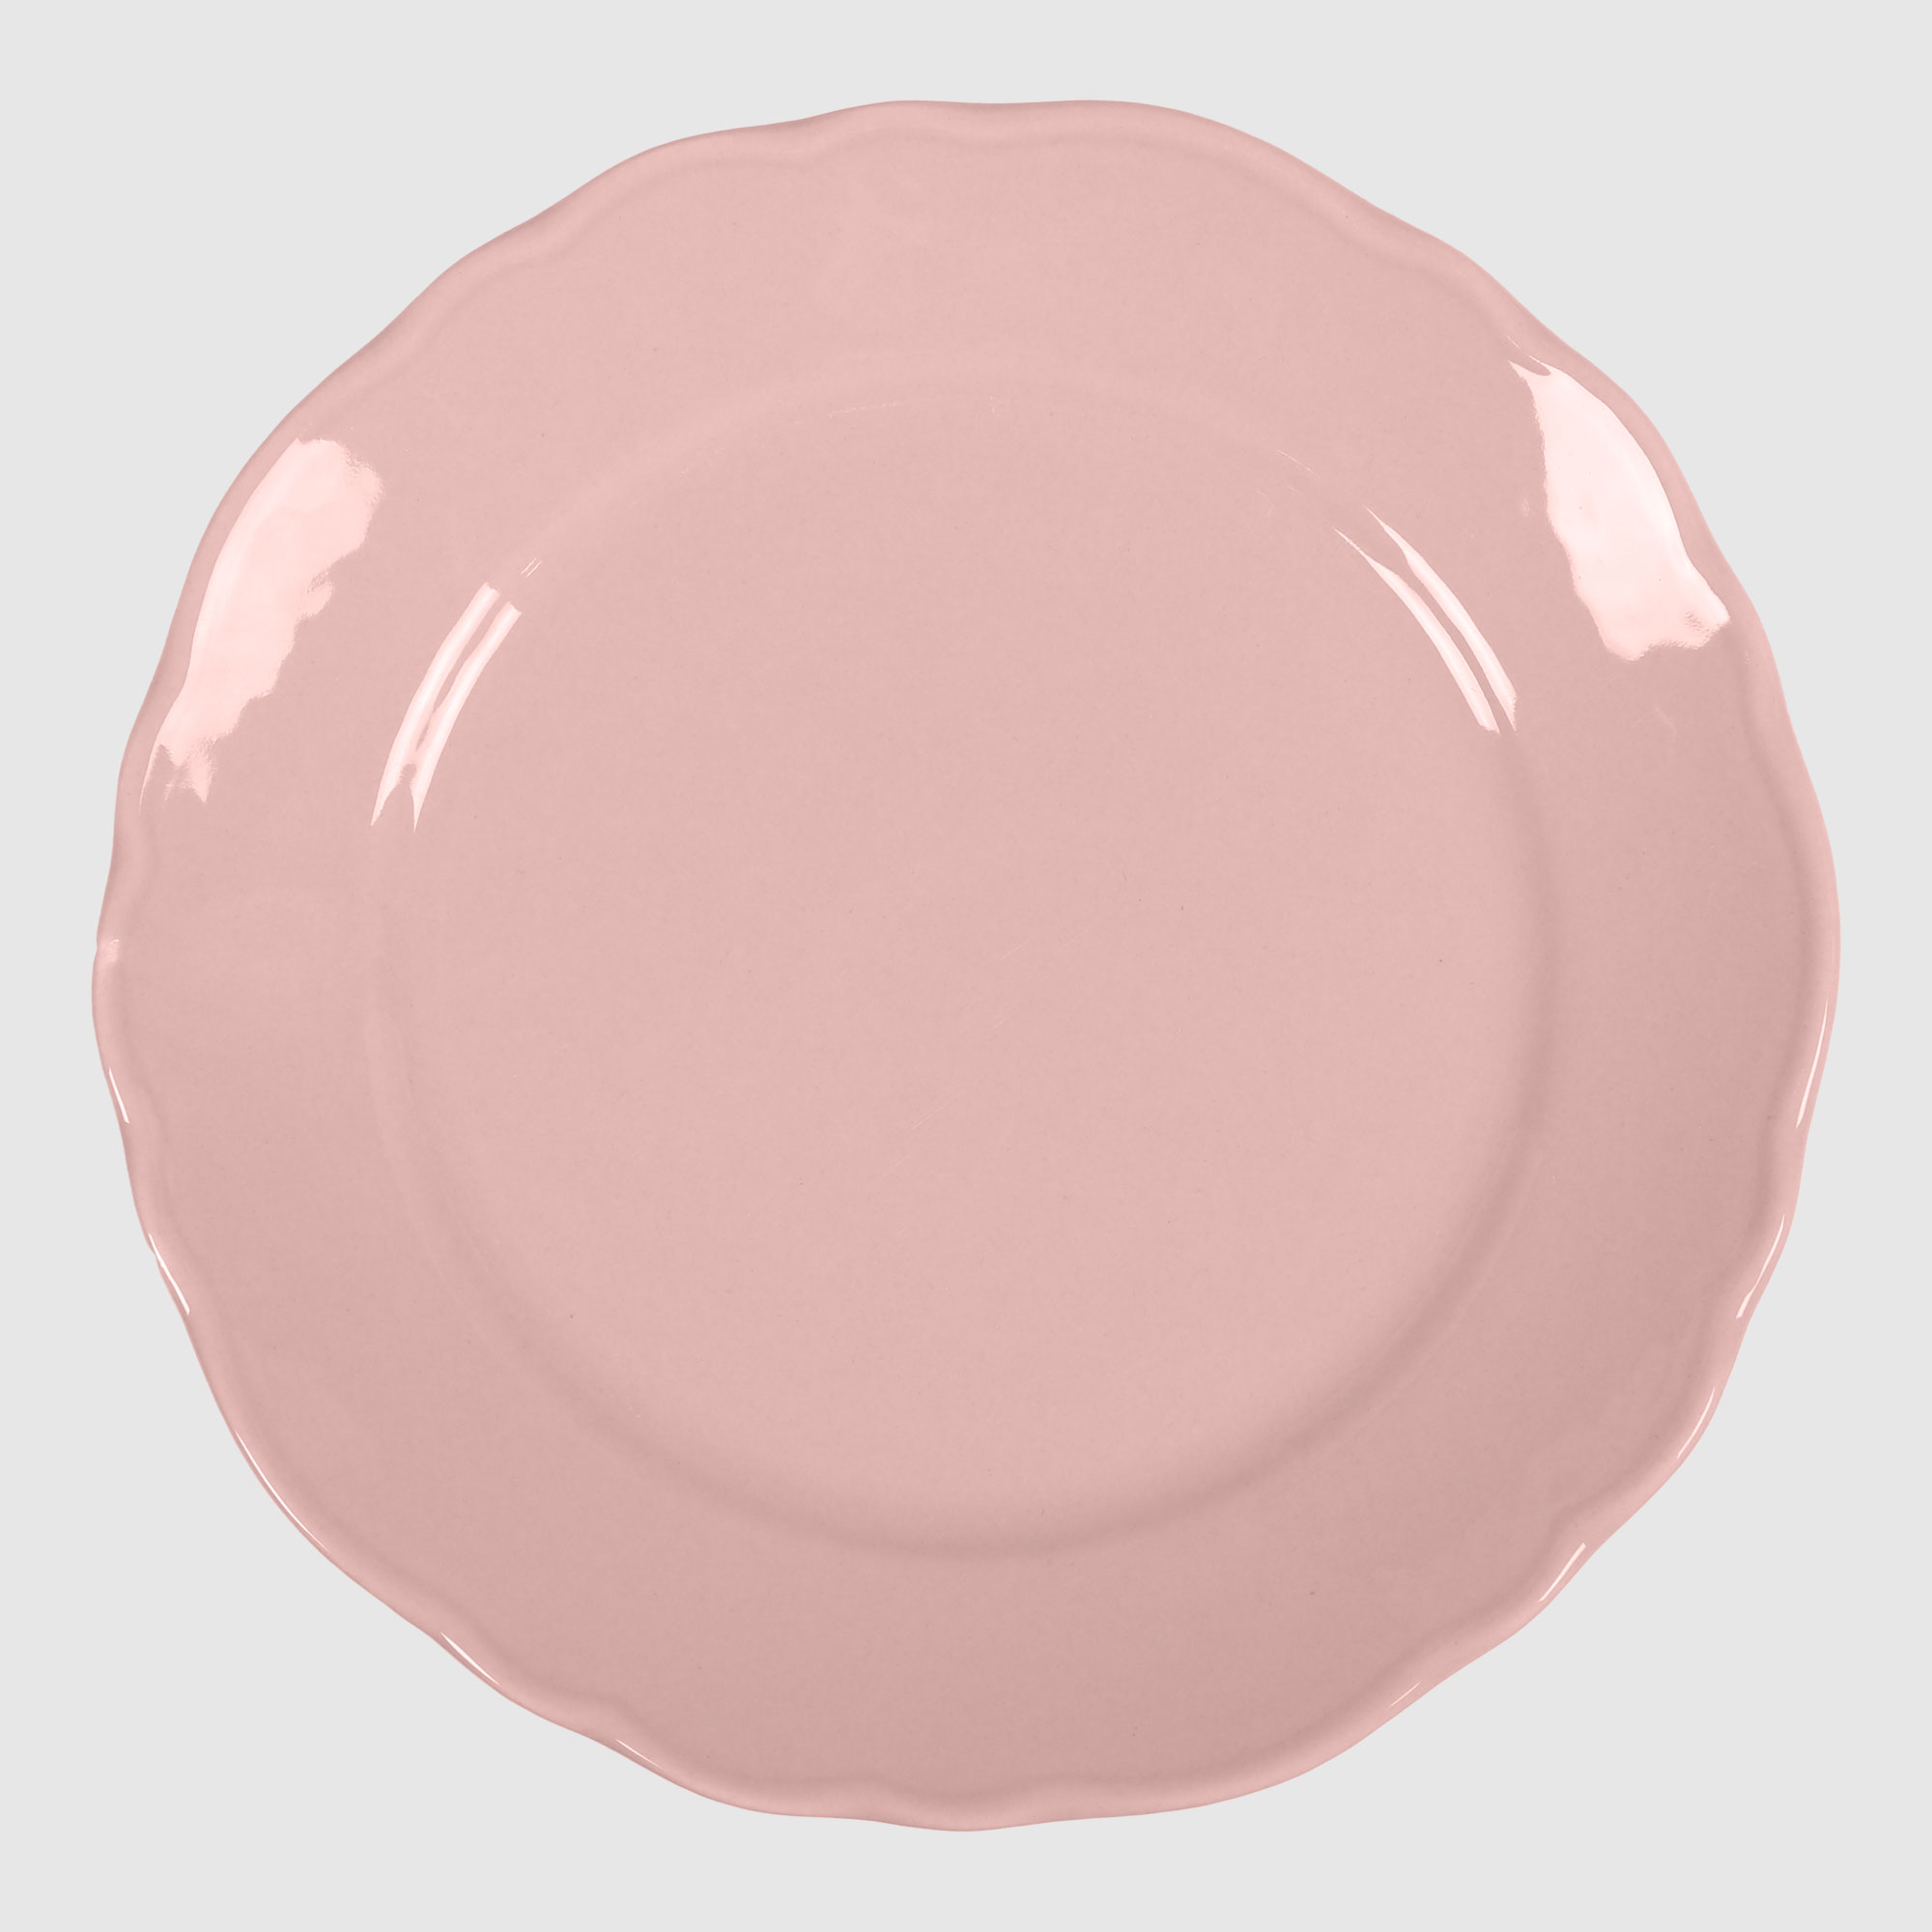 Тарелка Kutahya porselen Lar розовая 19 см тарелка kutahya porselen lar розовая 19 см